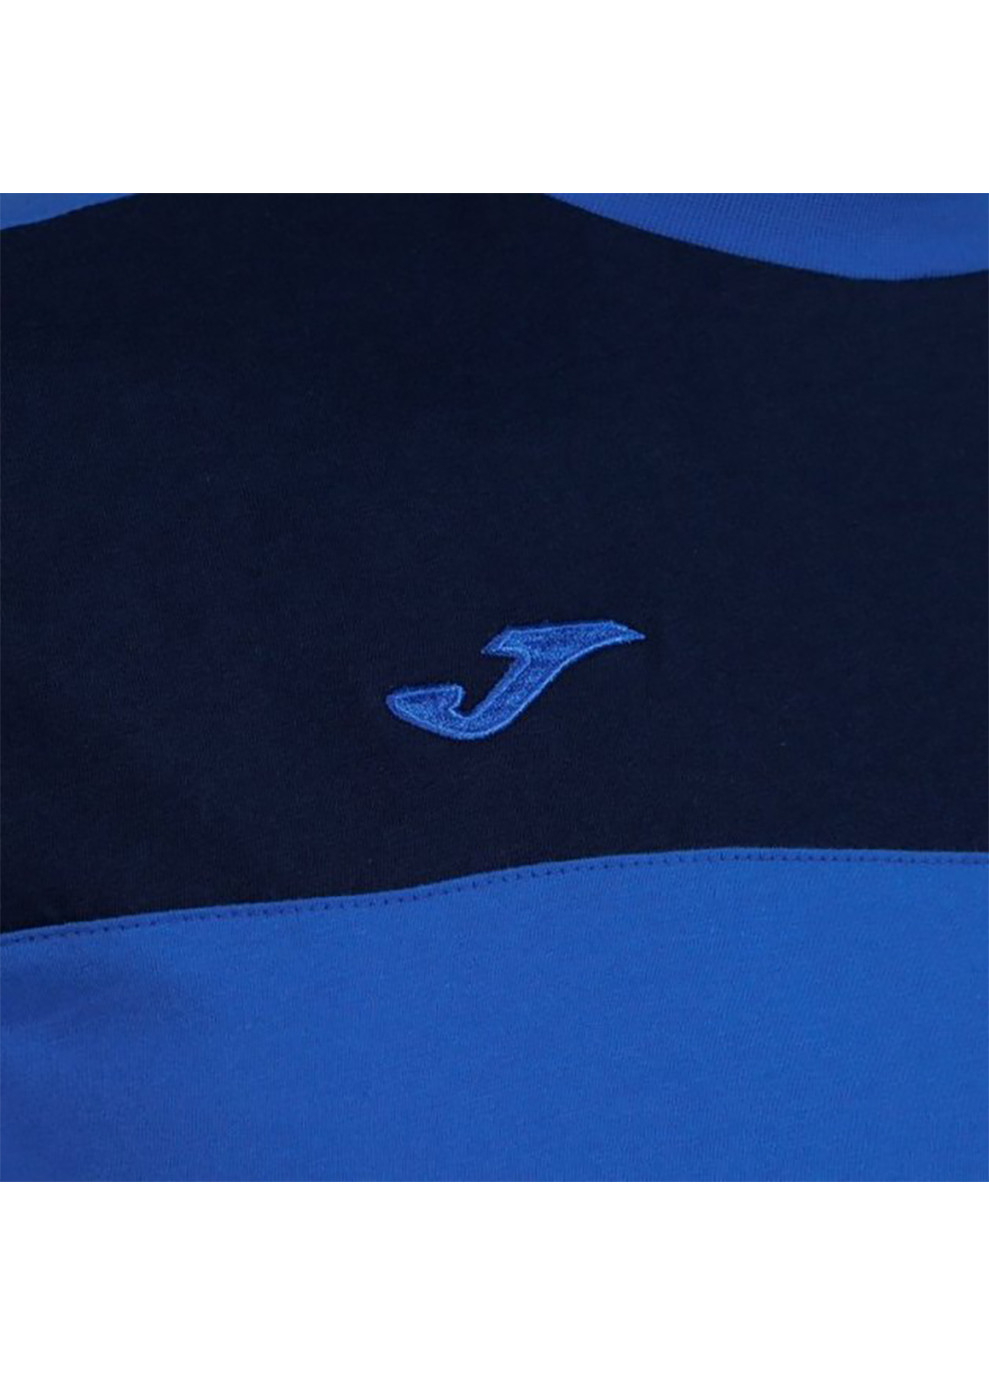 Комбинированная мужская футболка crew v синий темно-синий Joma